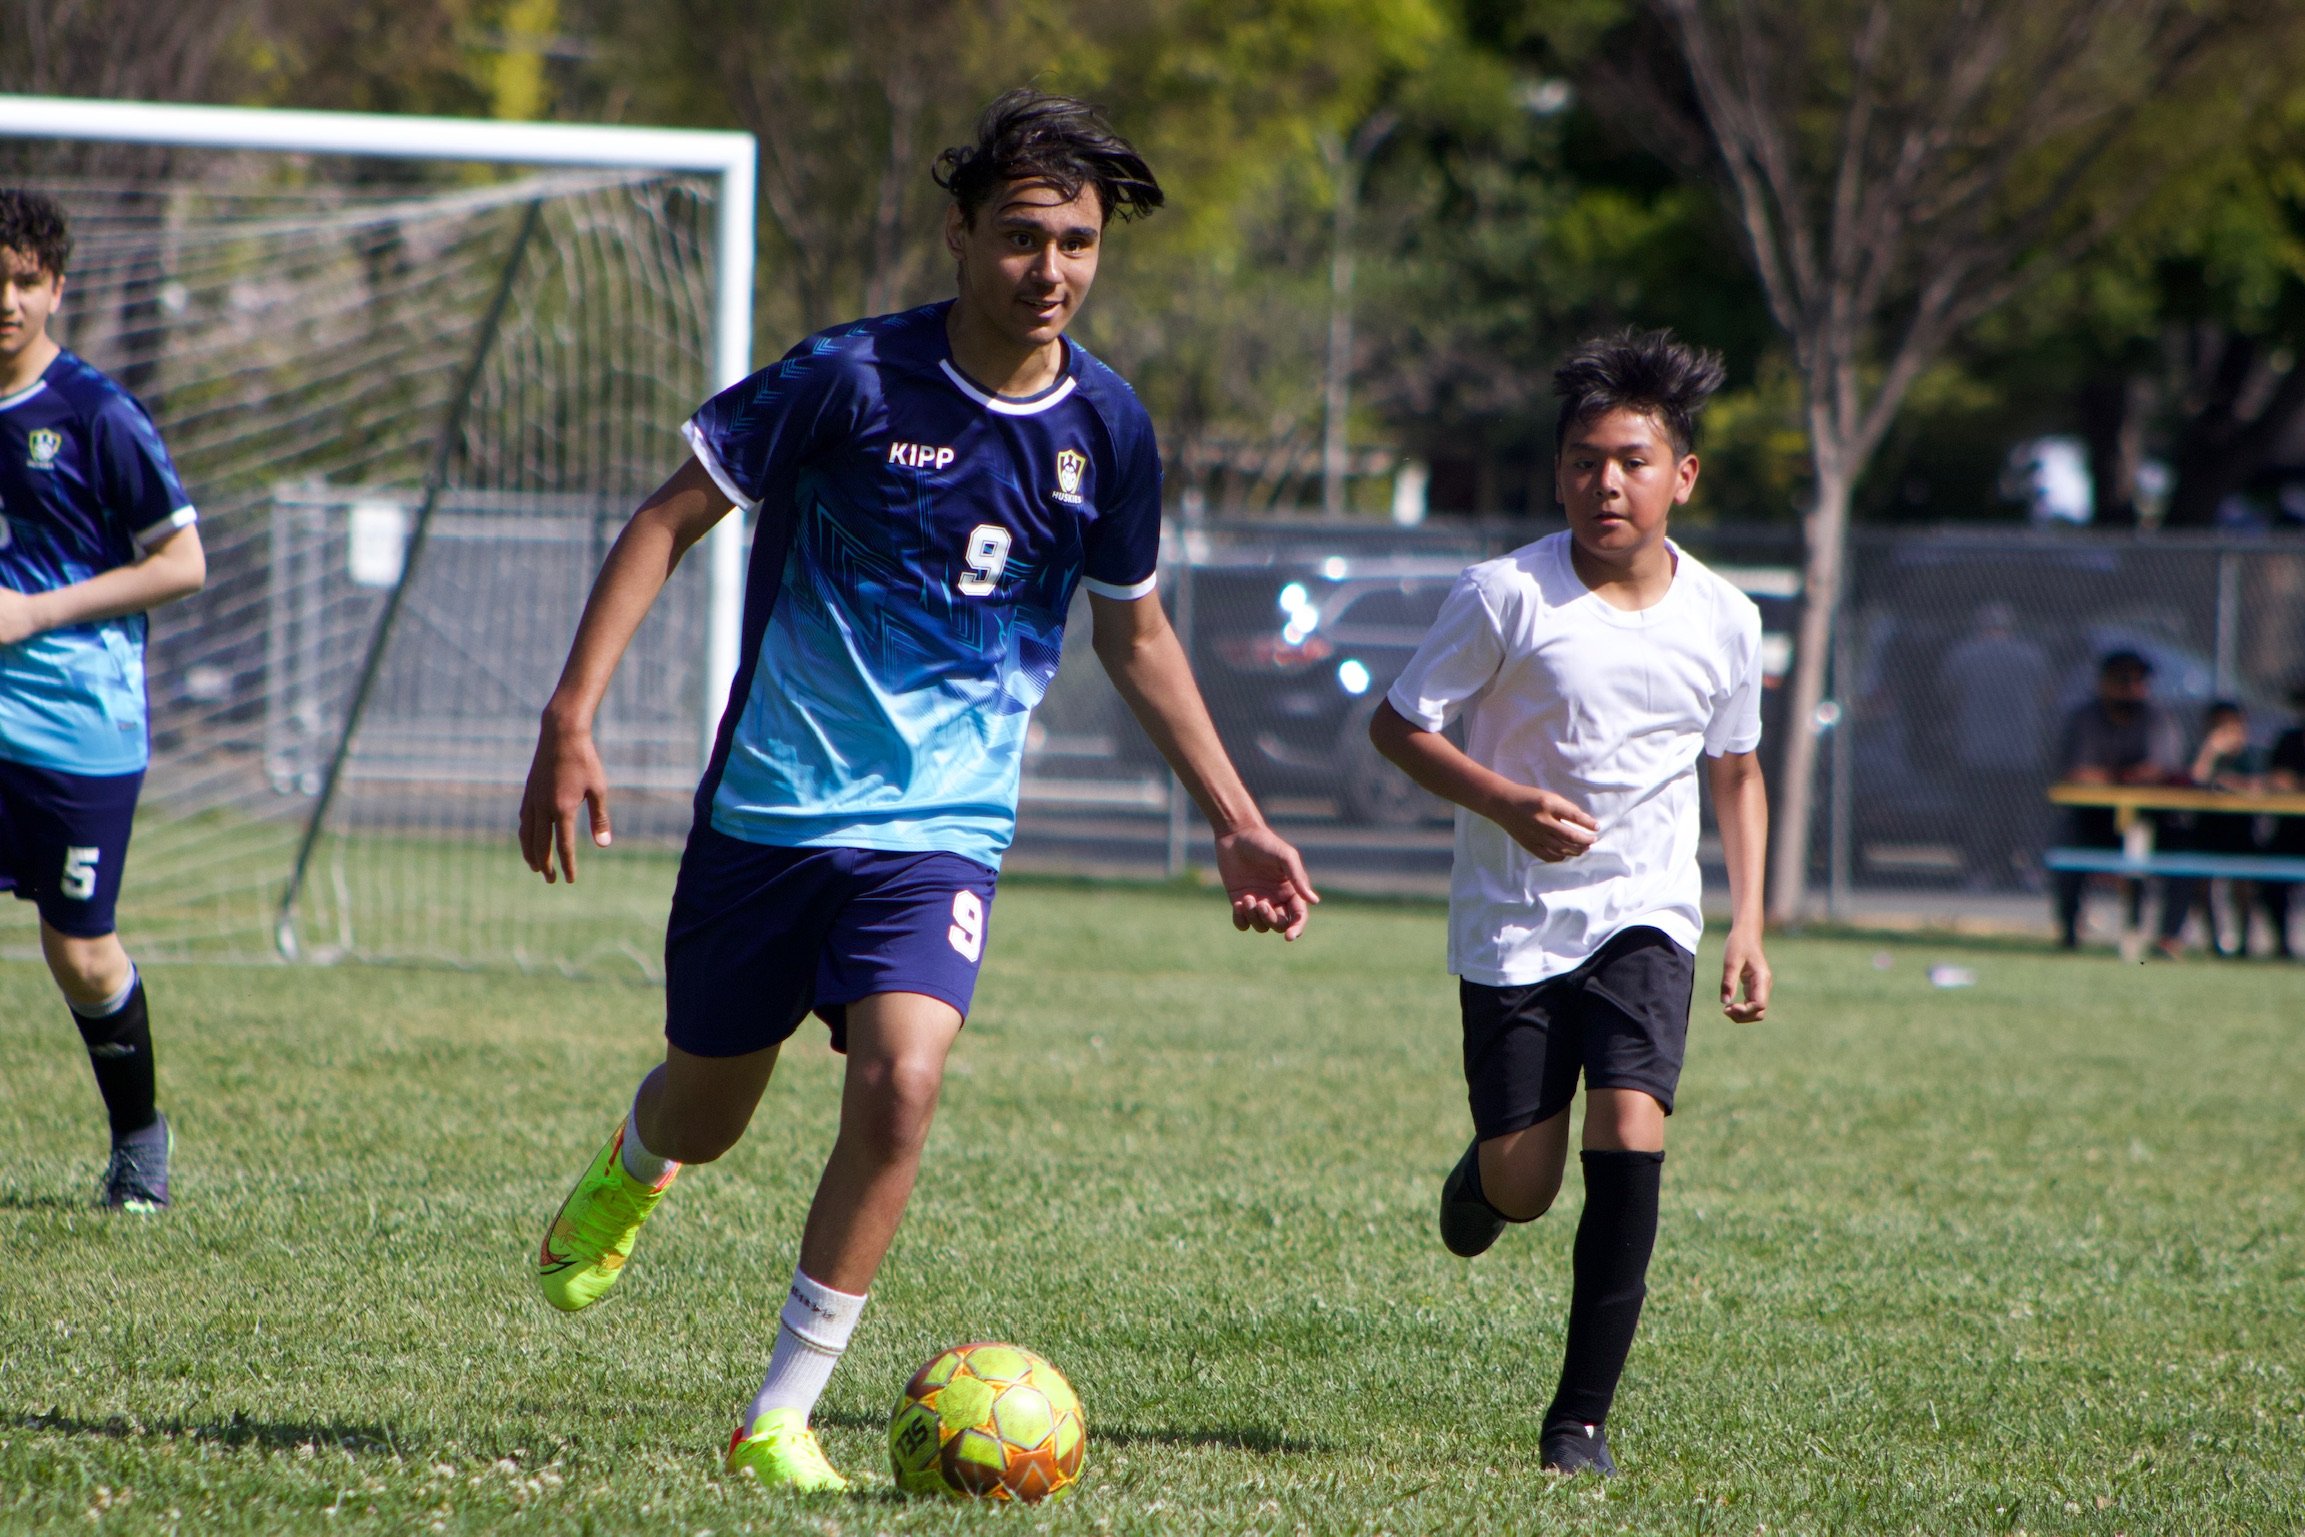 Middle School Soccer League (4/21)